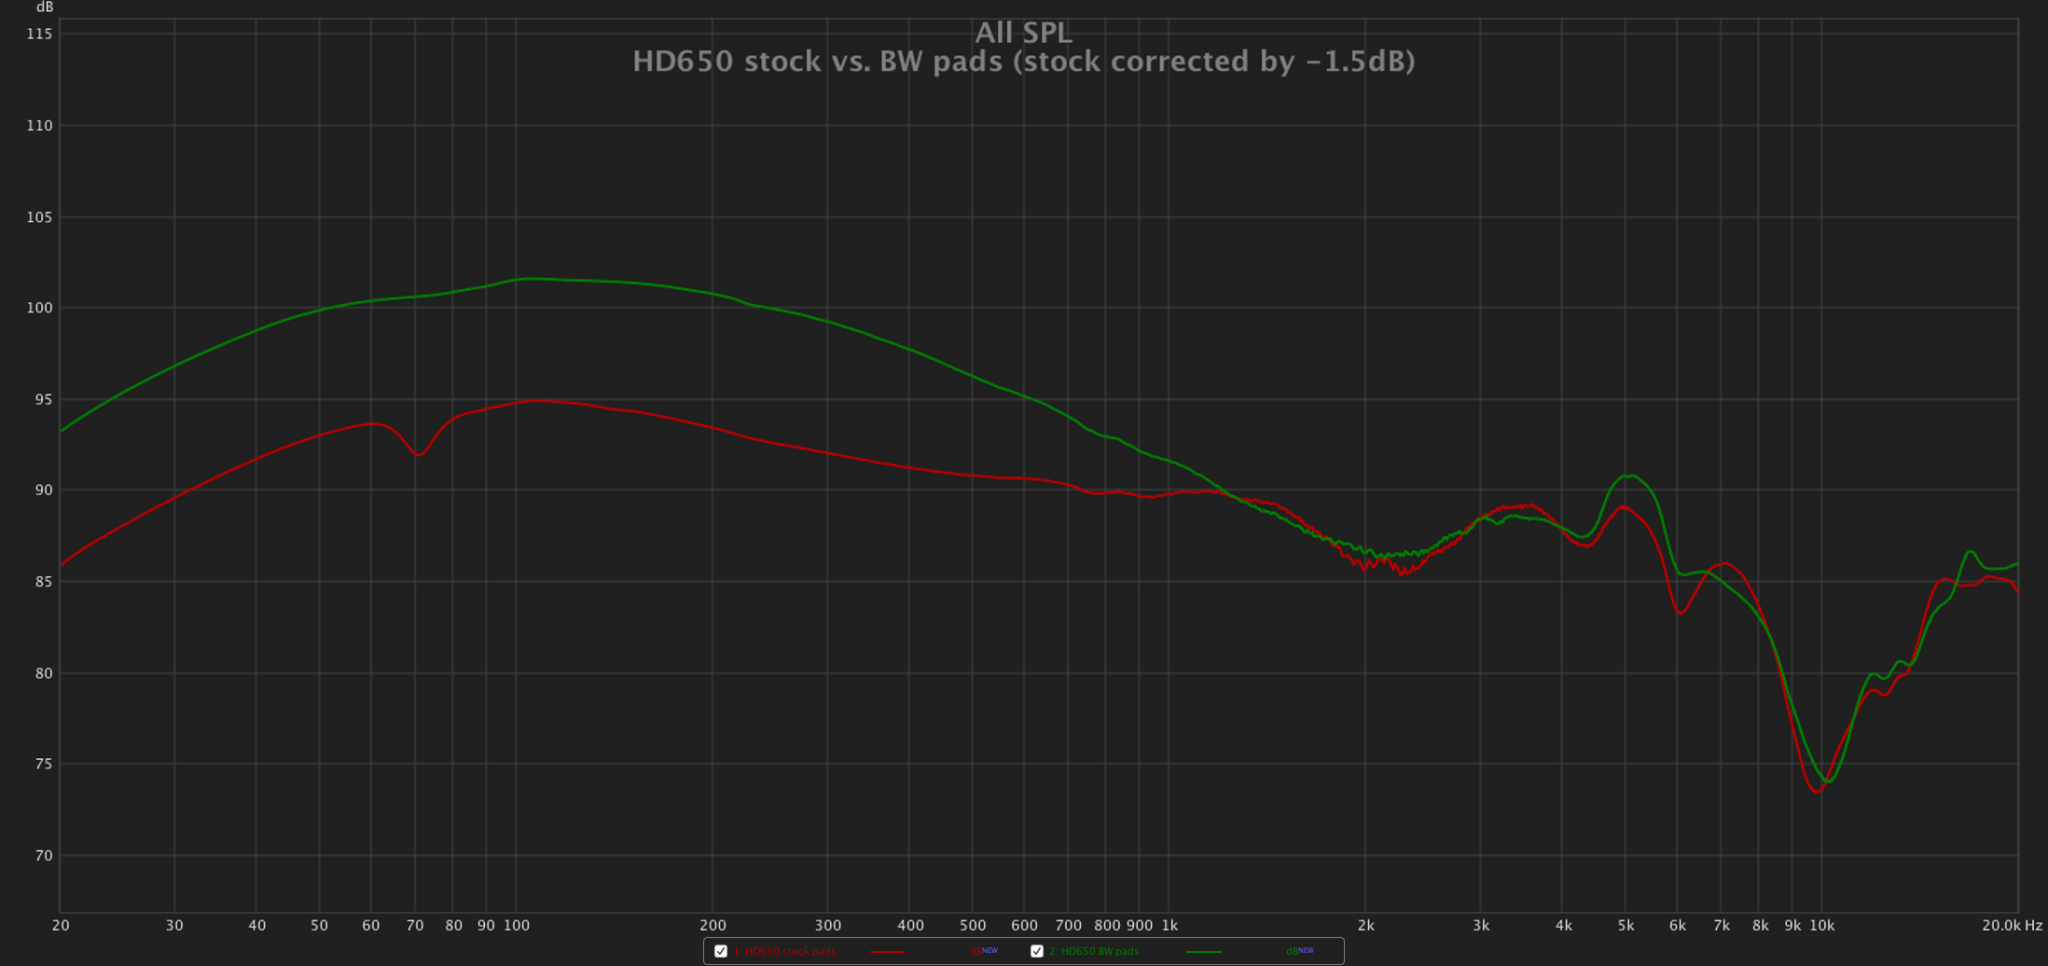 HD650 stock vs. BW pads.png